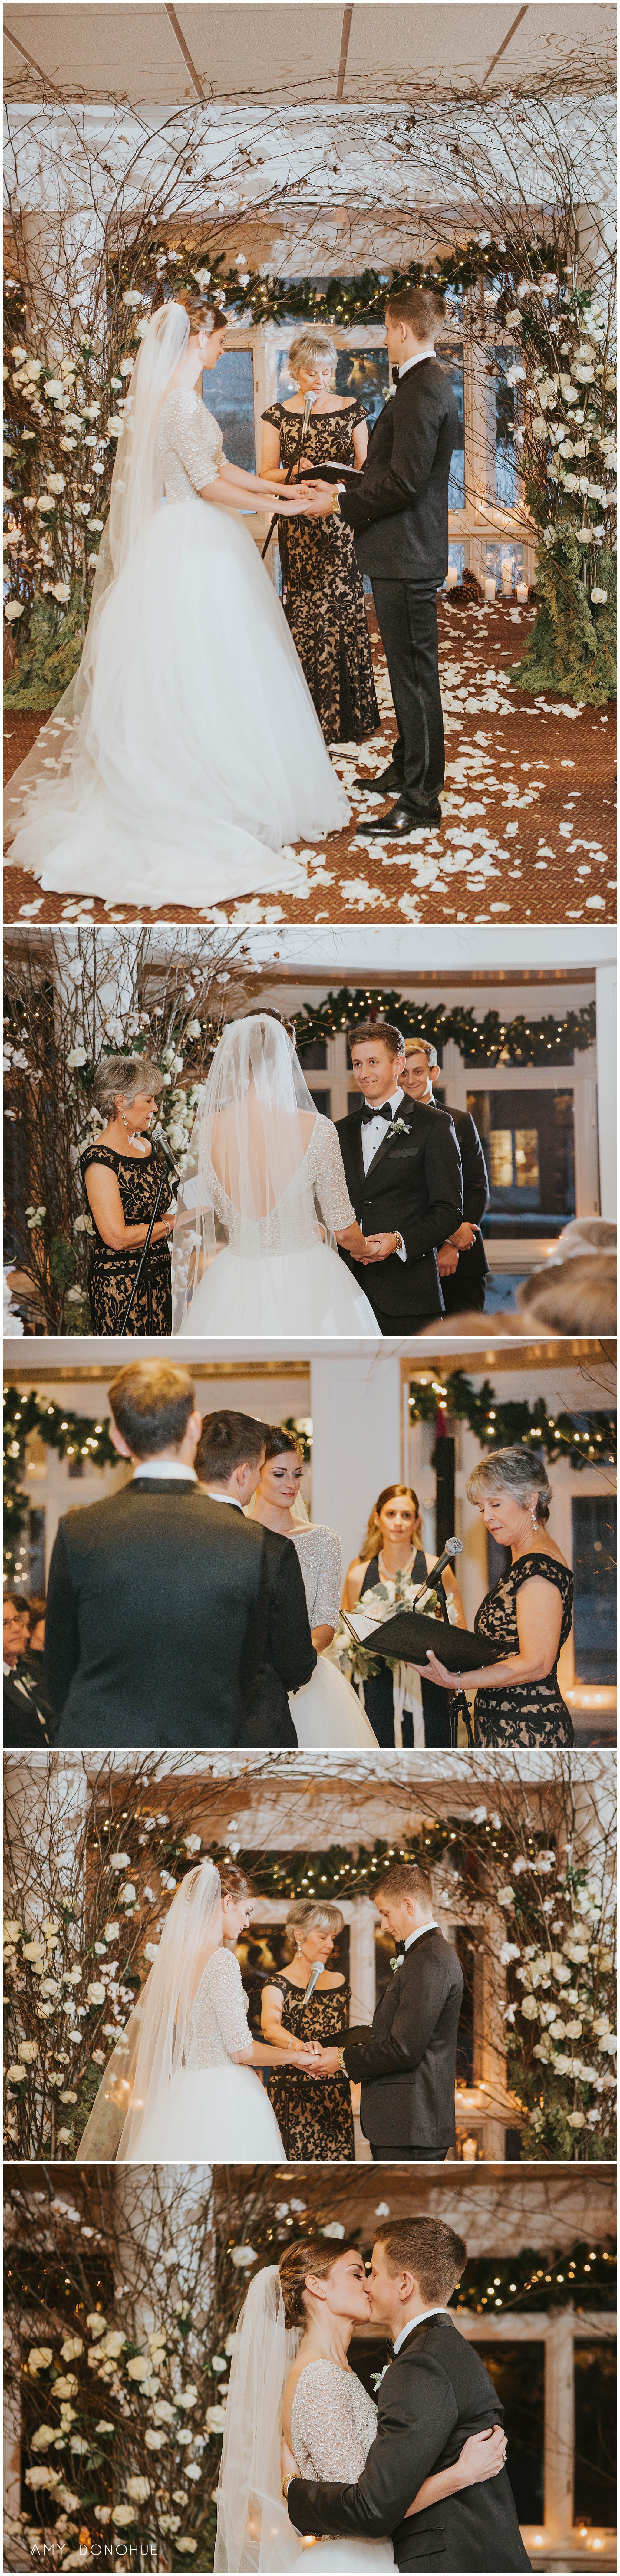 Winter wedding ceremony inside the Woodstock Inn and Resort